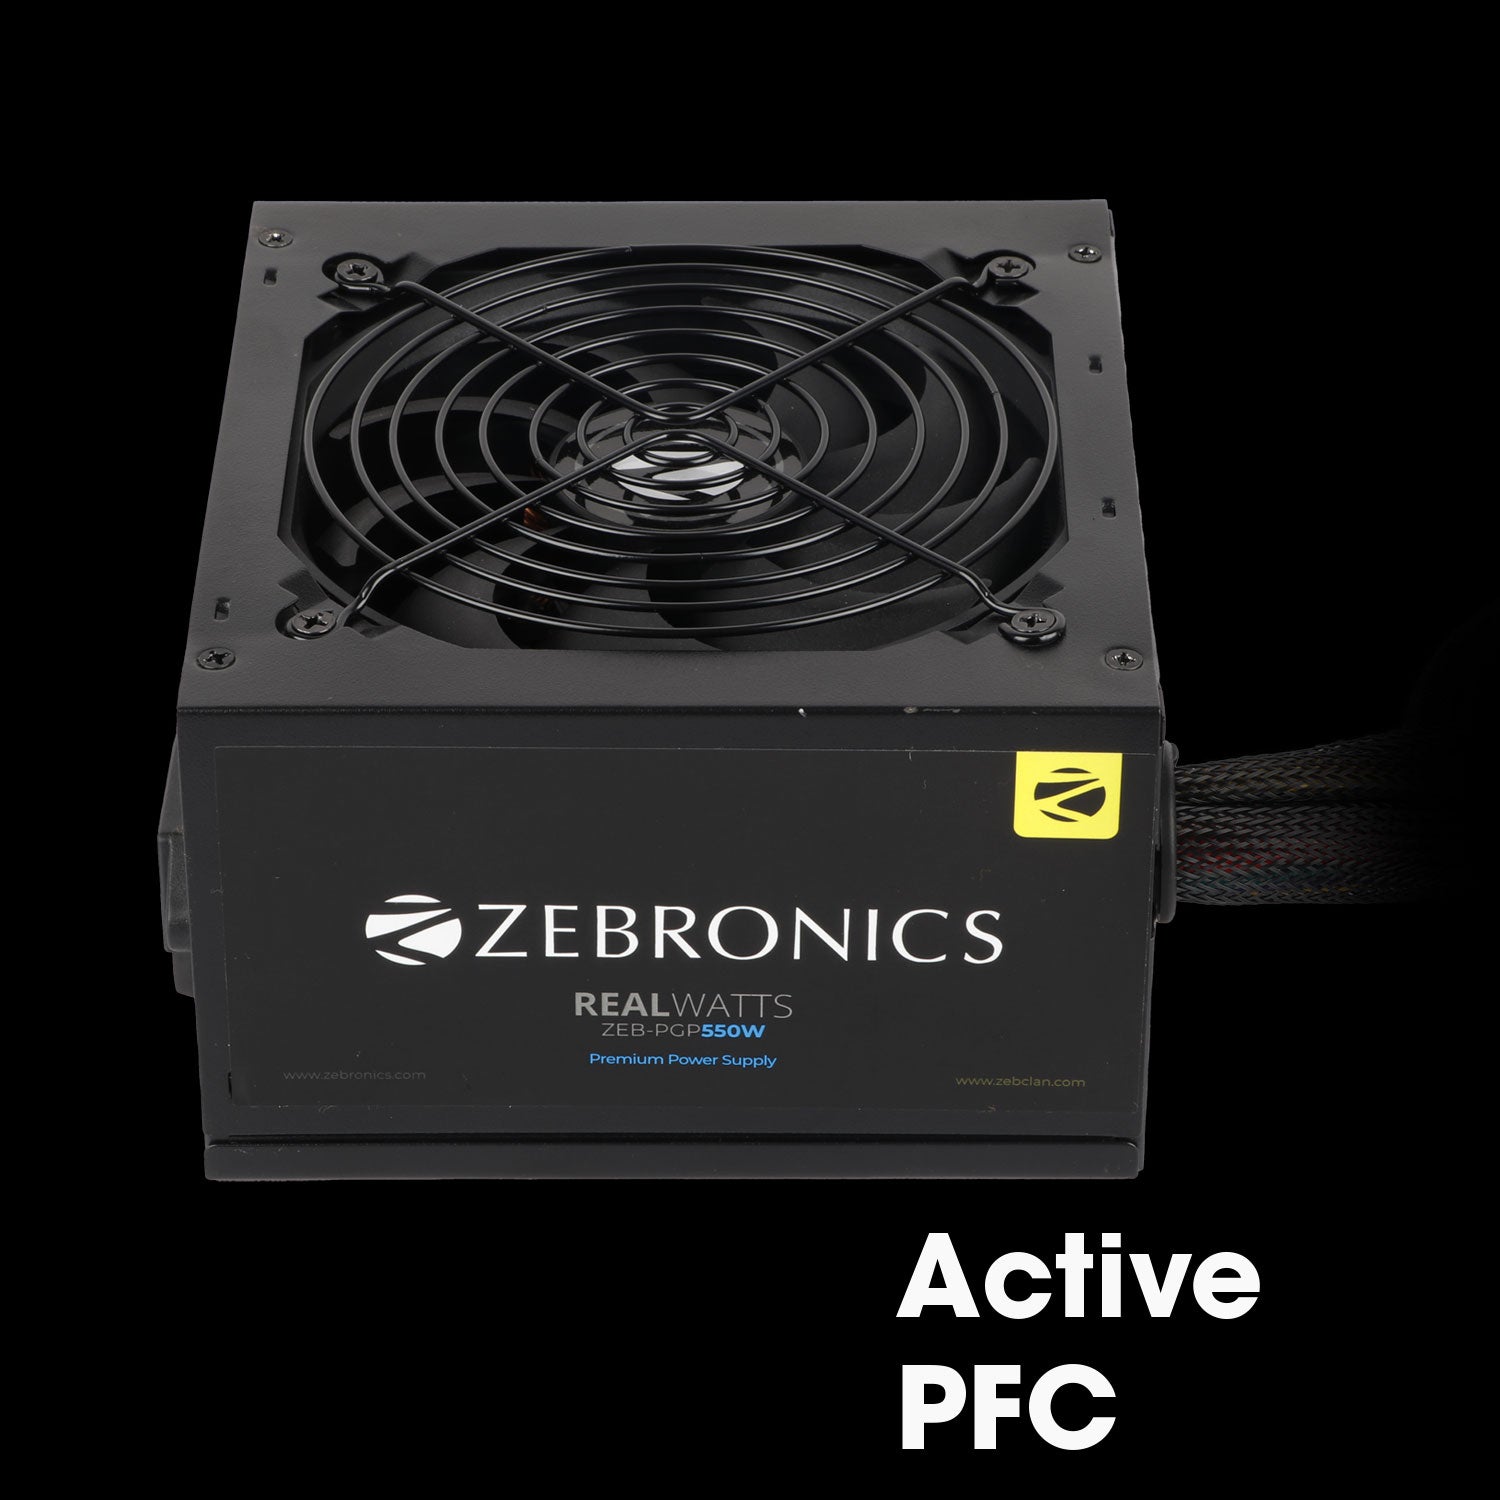 Zeb-PGP550W (80 Plus) - Premium Power Supply - Zebronics